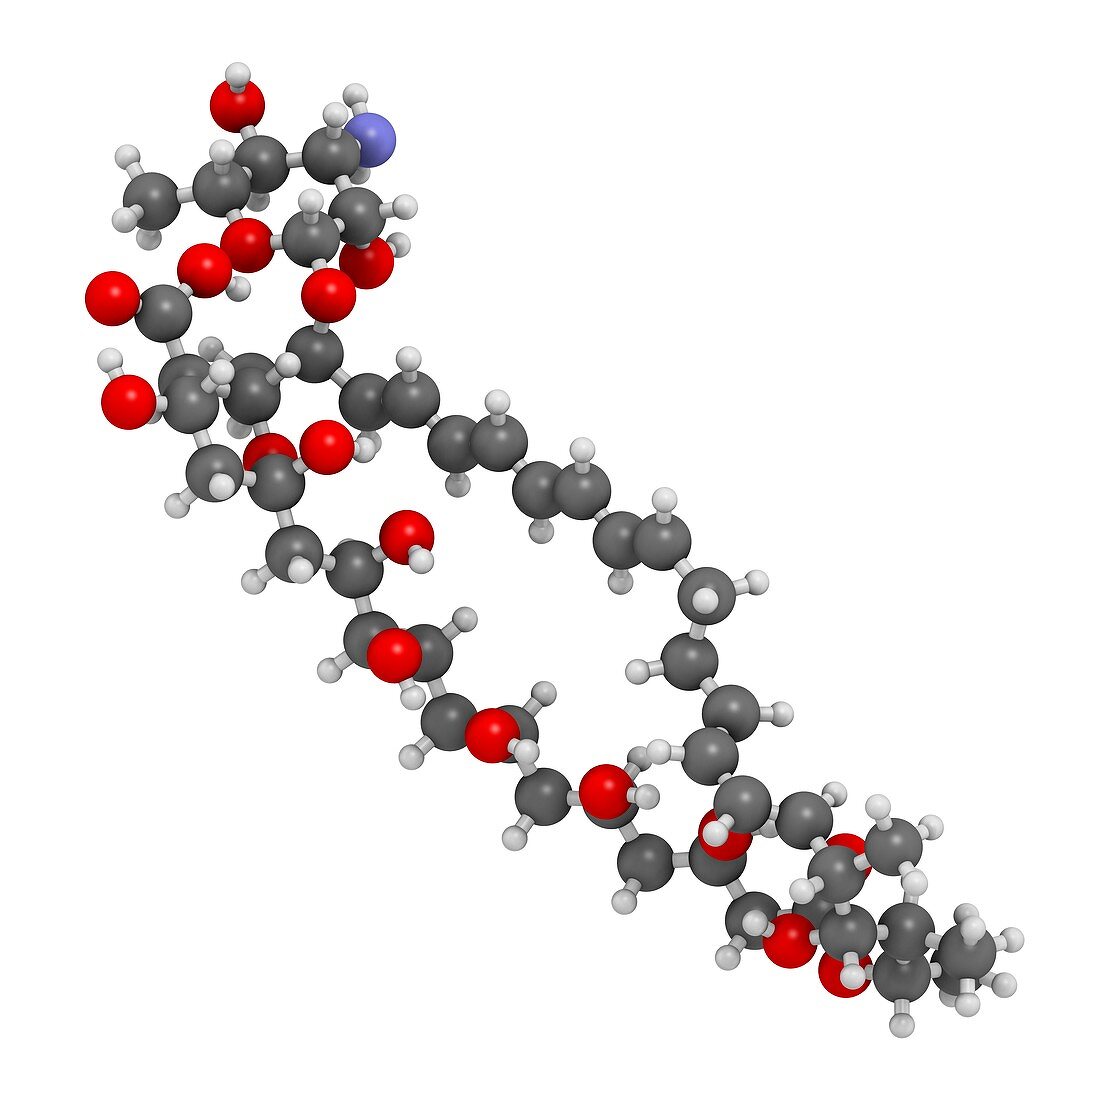 Nystatin antifungal drug molecule